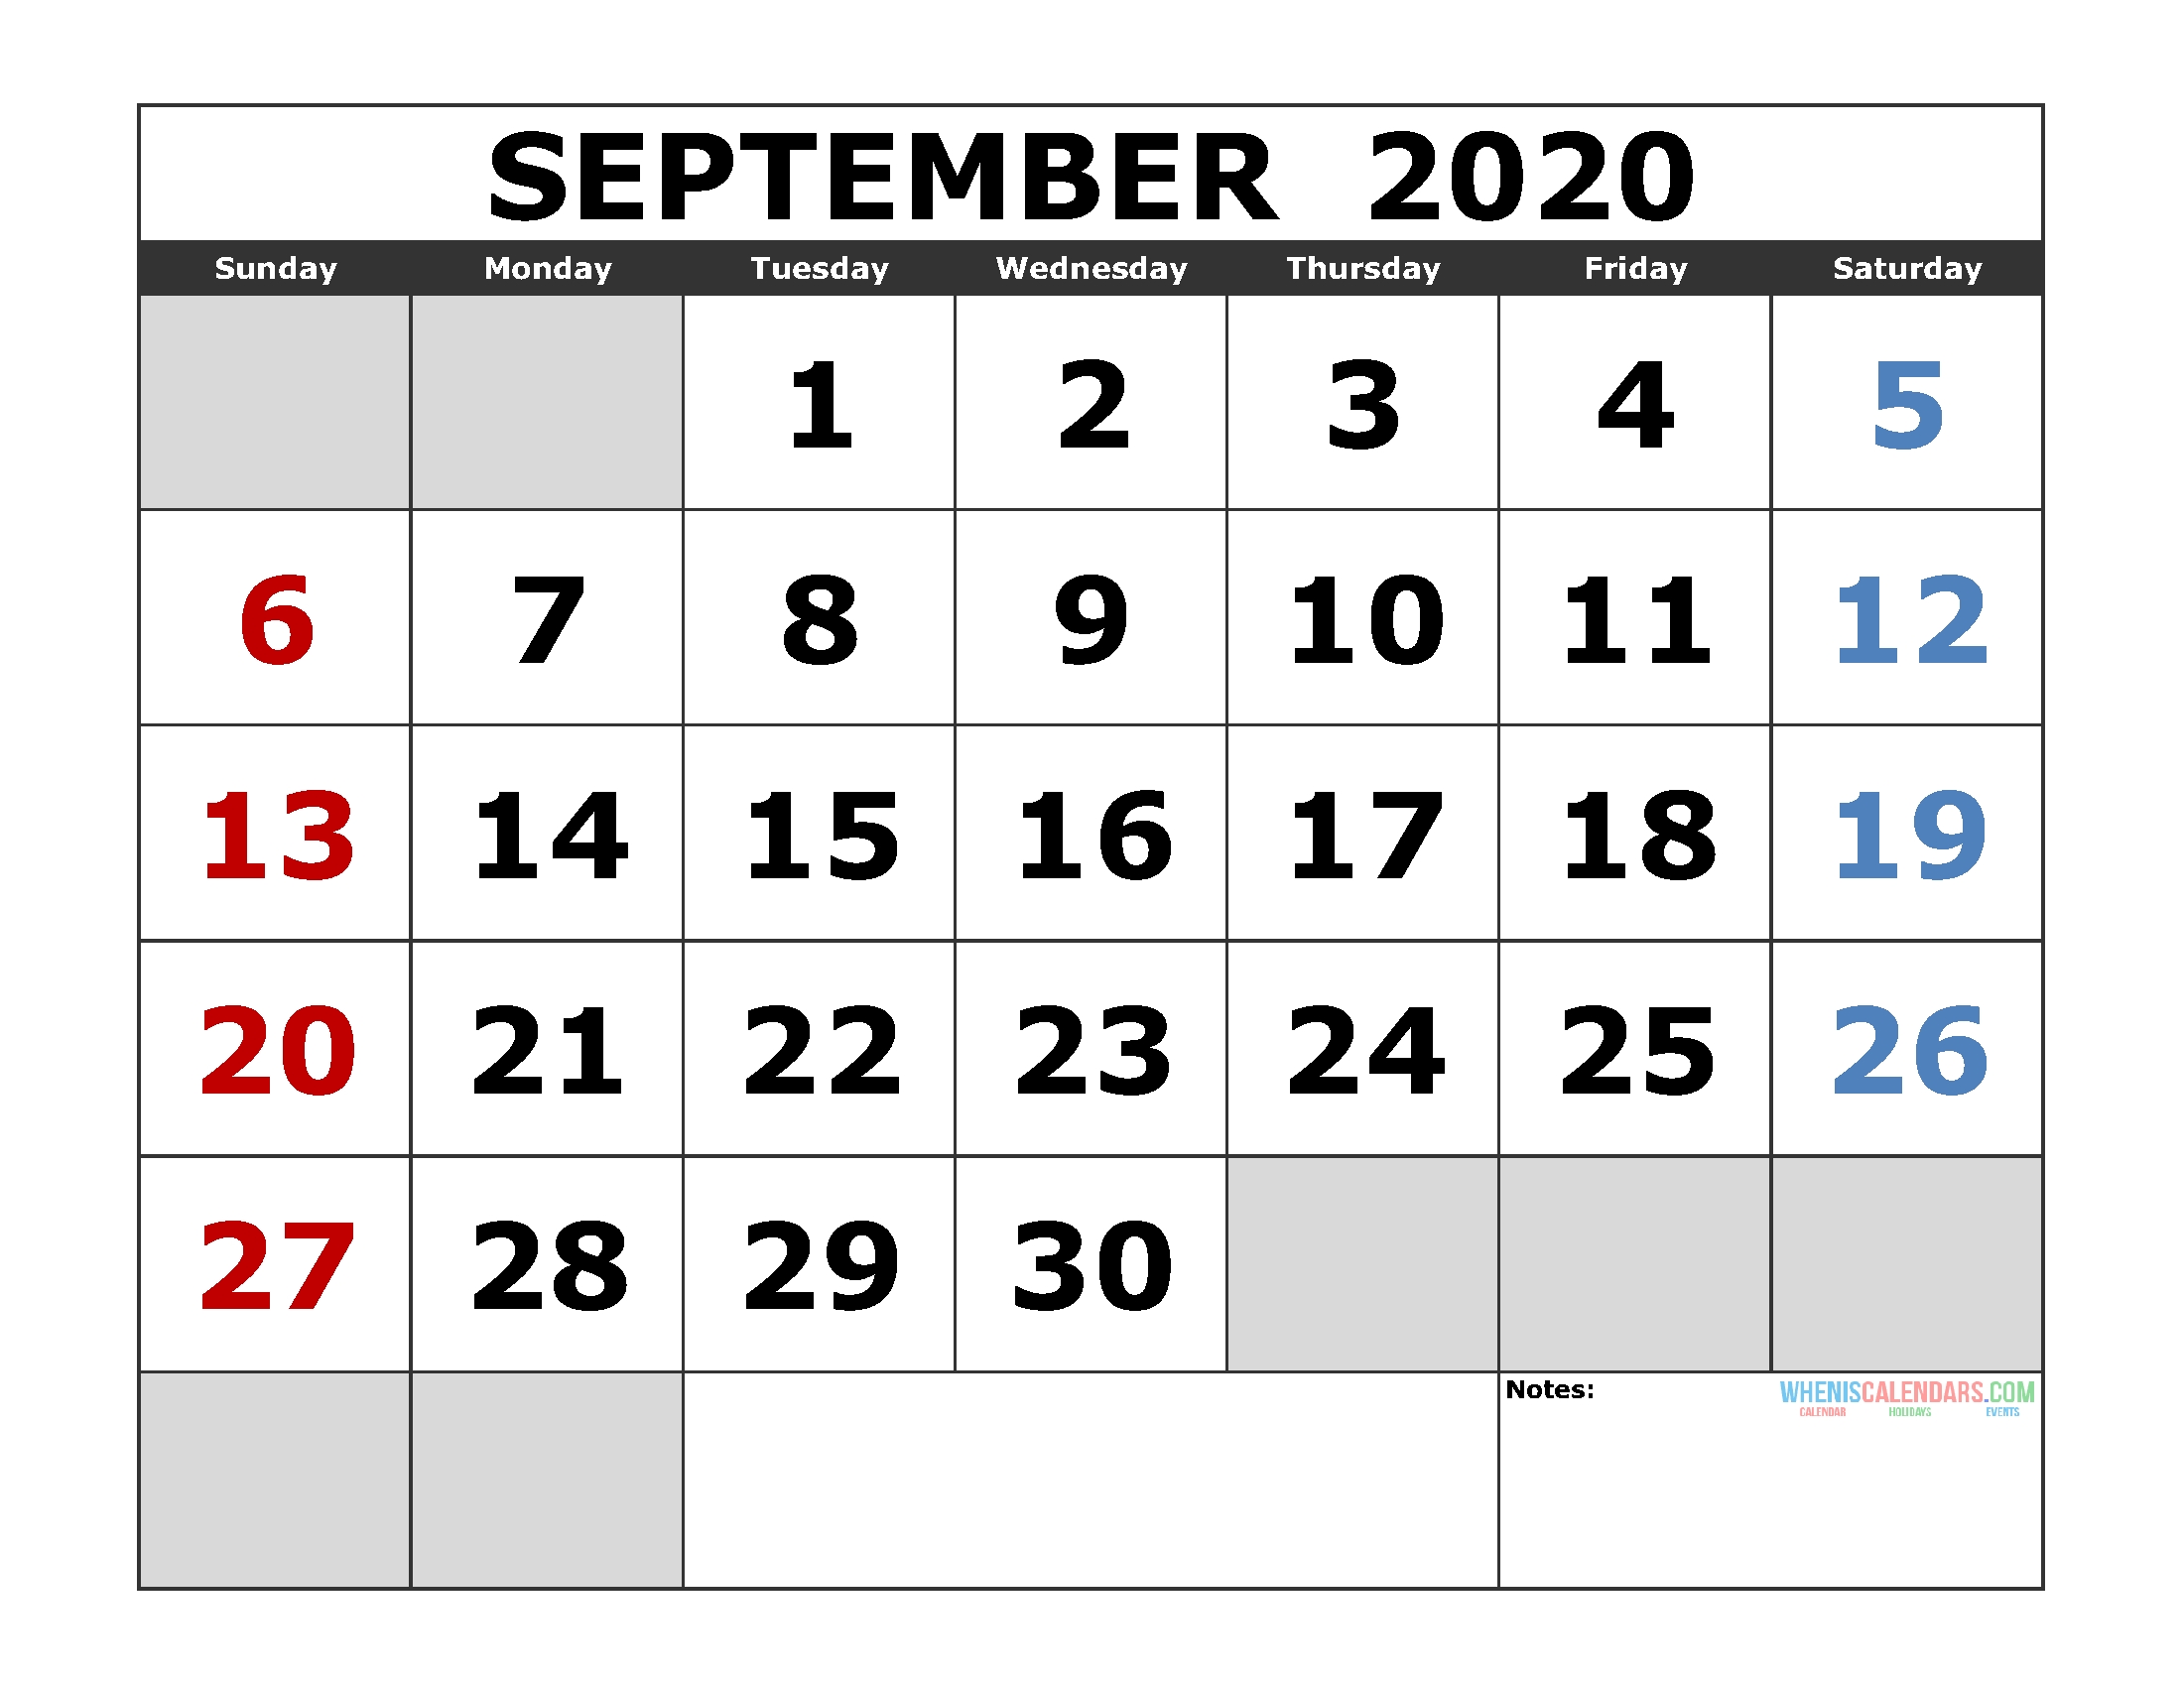 September 2020 Printable Calendar Template Excel, Pdf, Image Calendar From September 2020 To December With Jewish Holidays